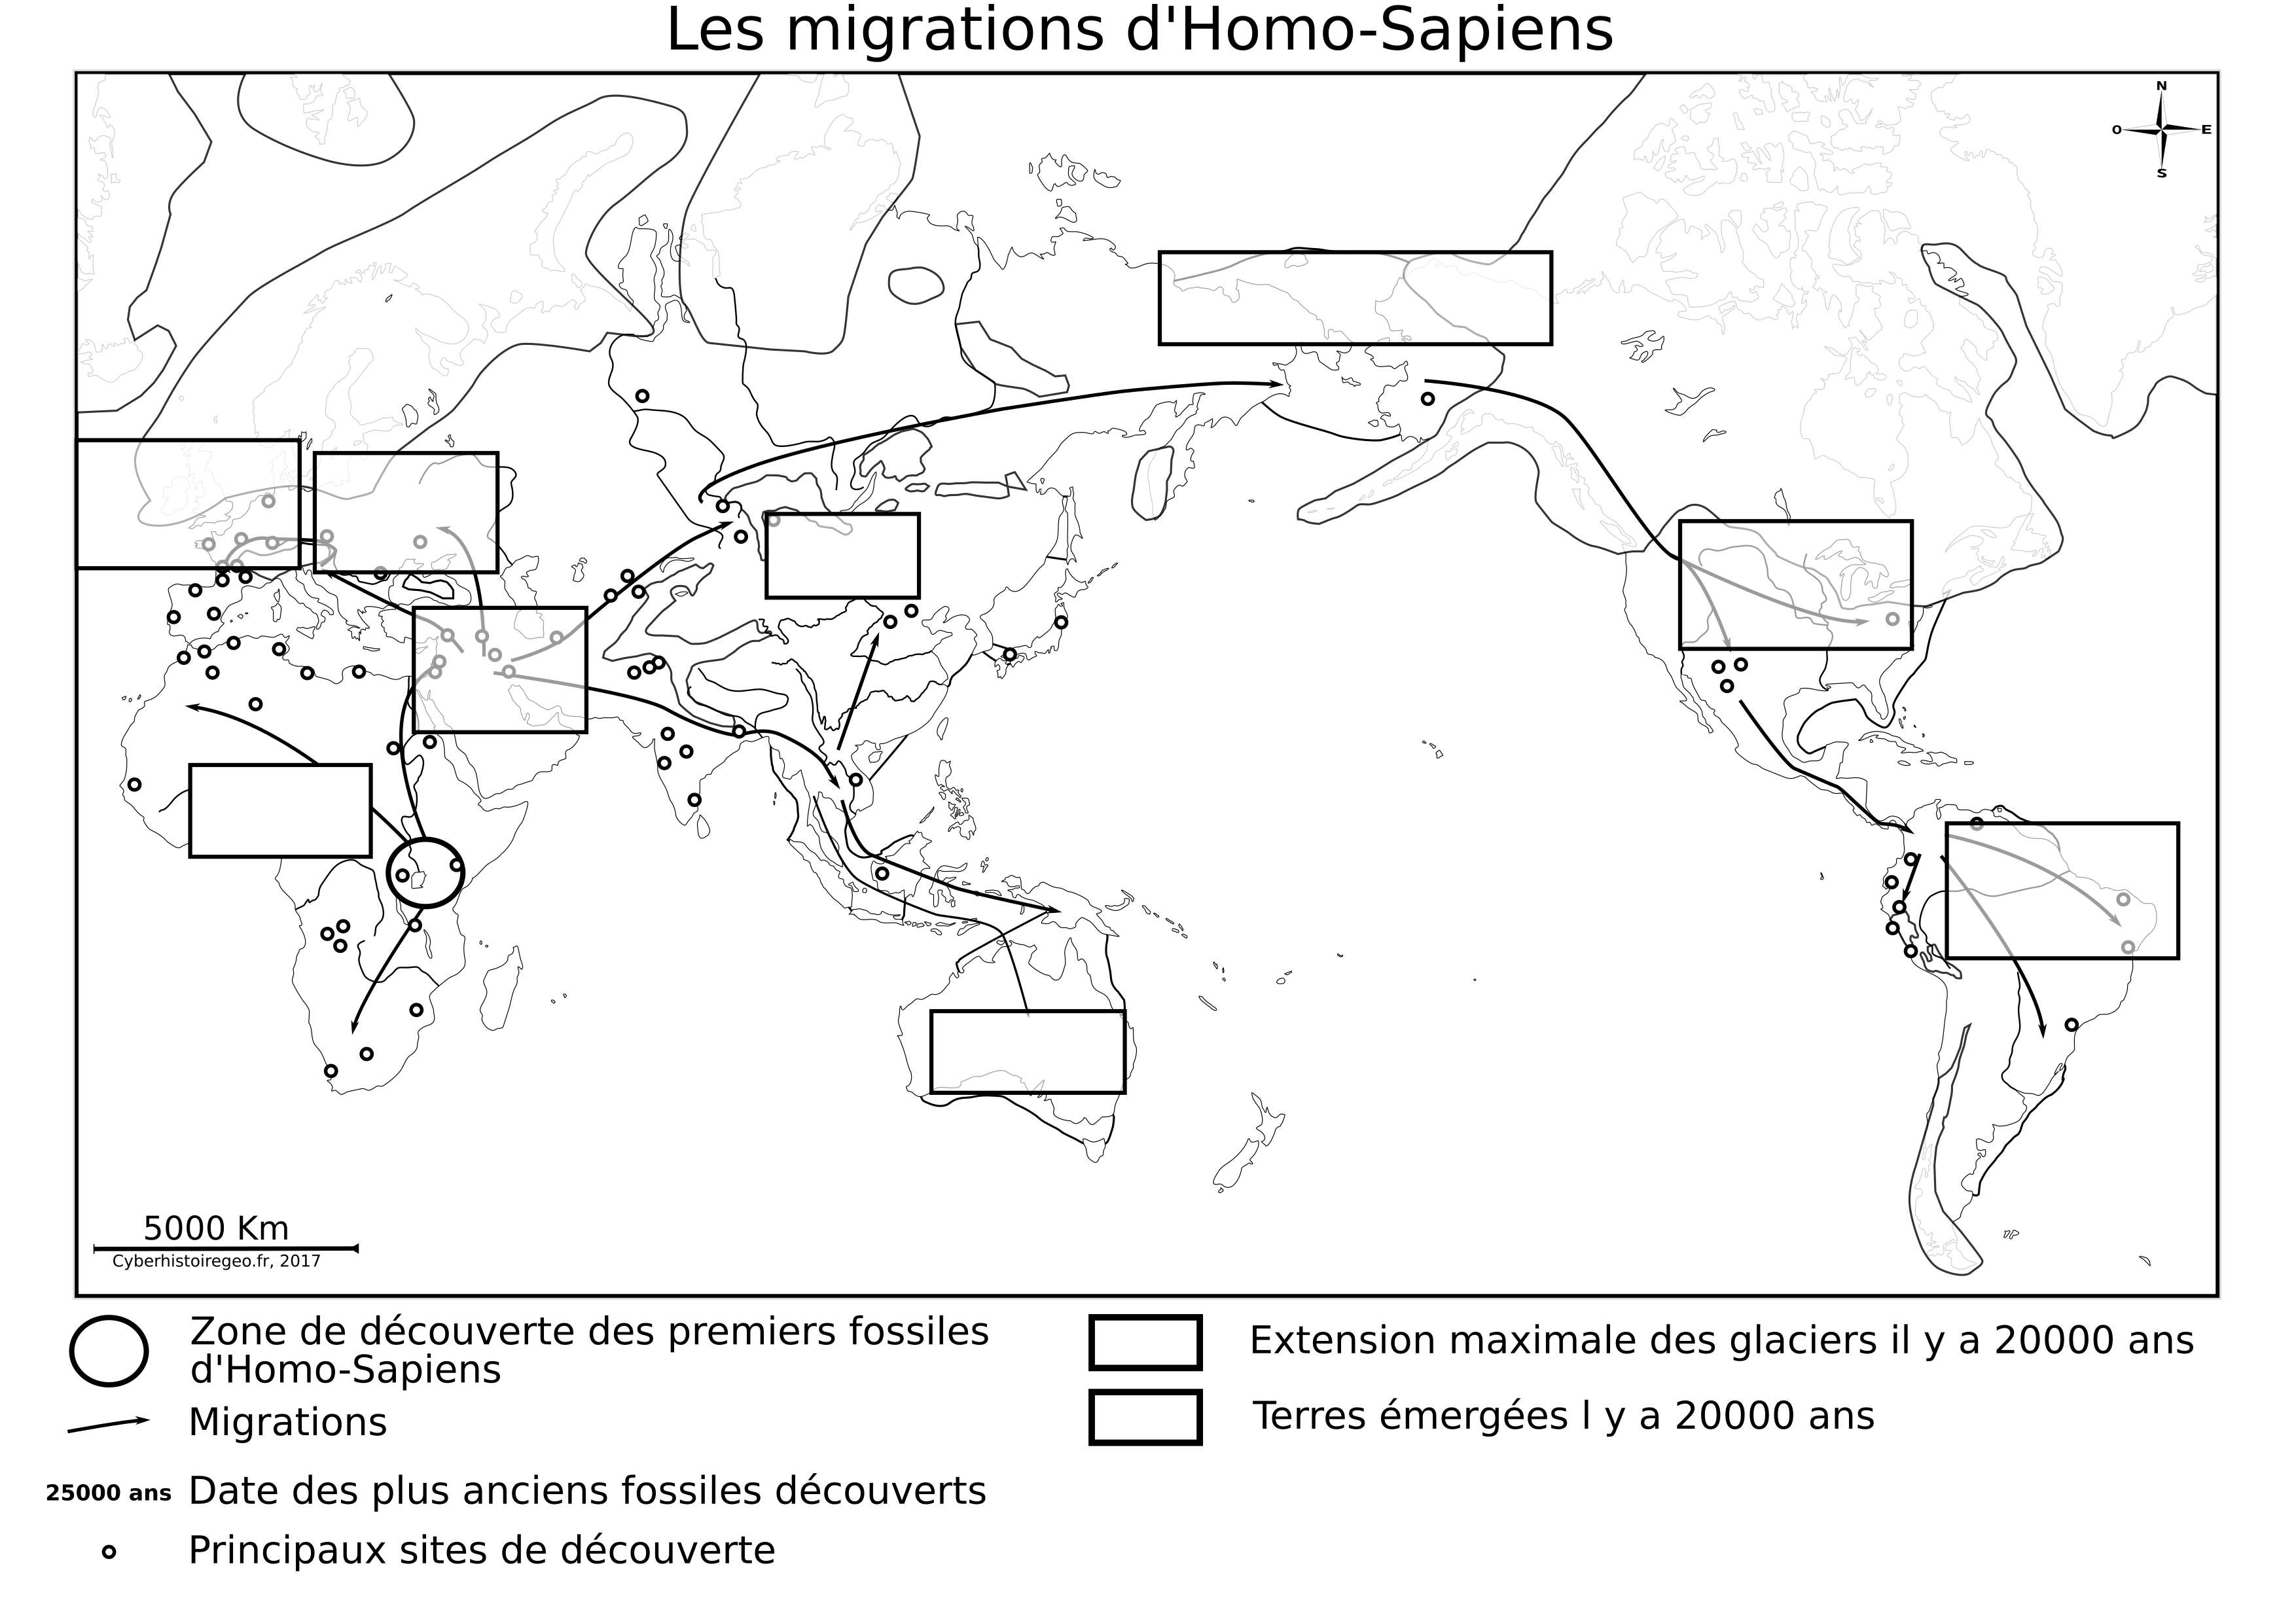 Les migrations d'Homo Sapiens: fonds de carte